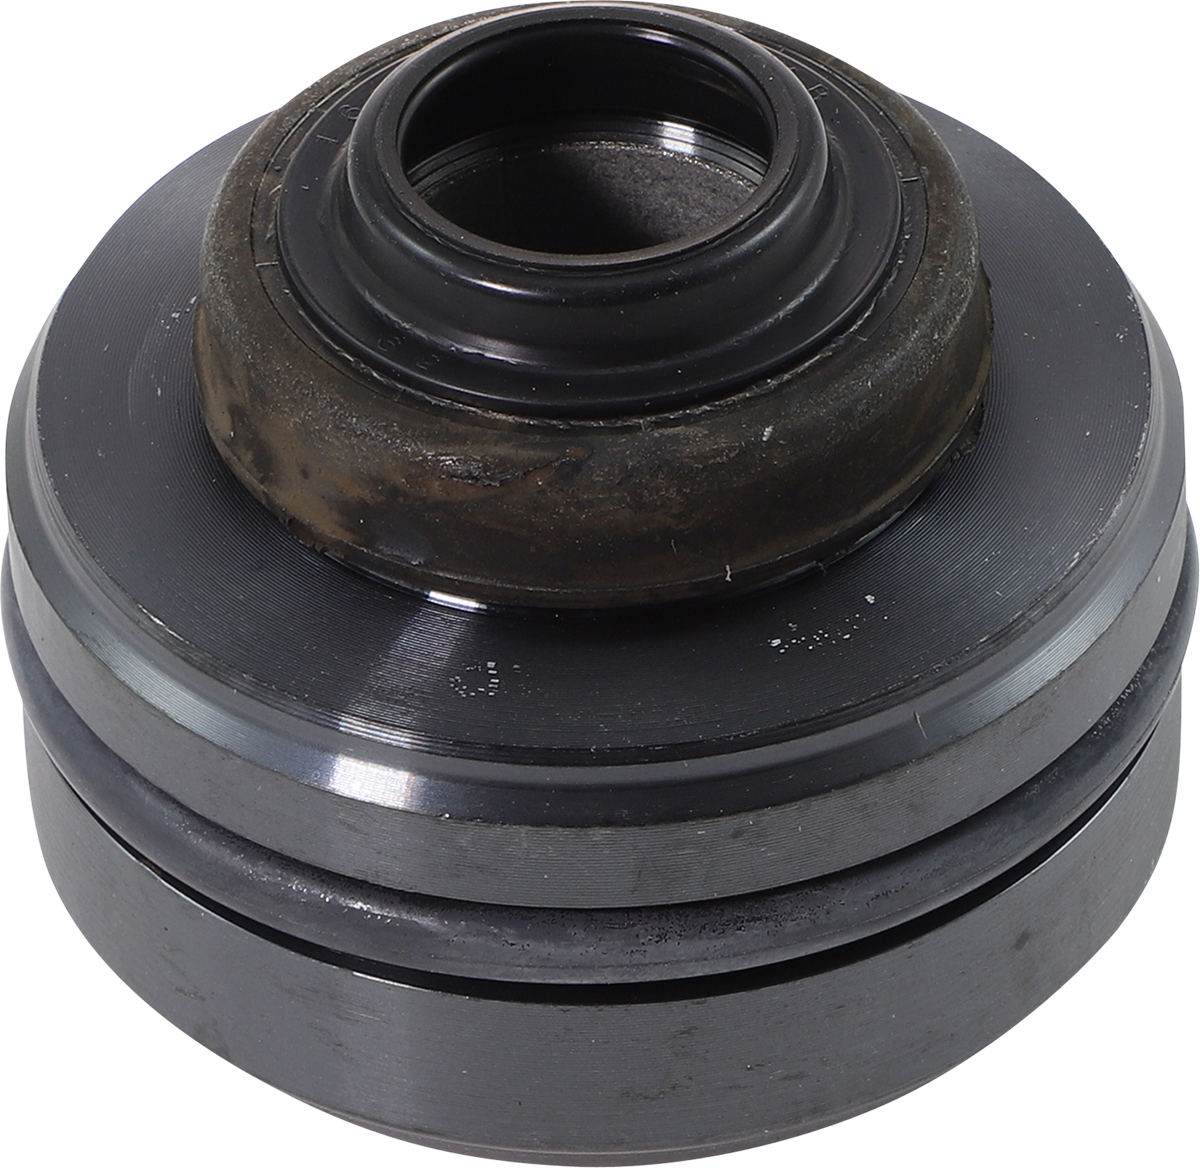 KYB Rear Shock Complete Seal Head - 46 mm/16 mm 120244600201